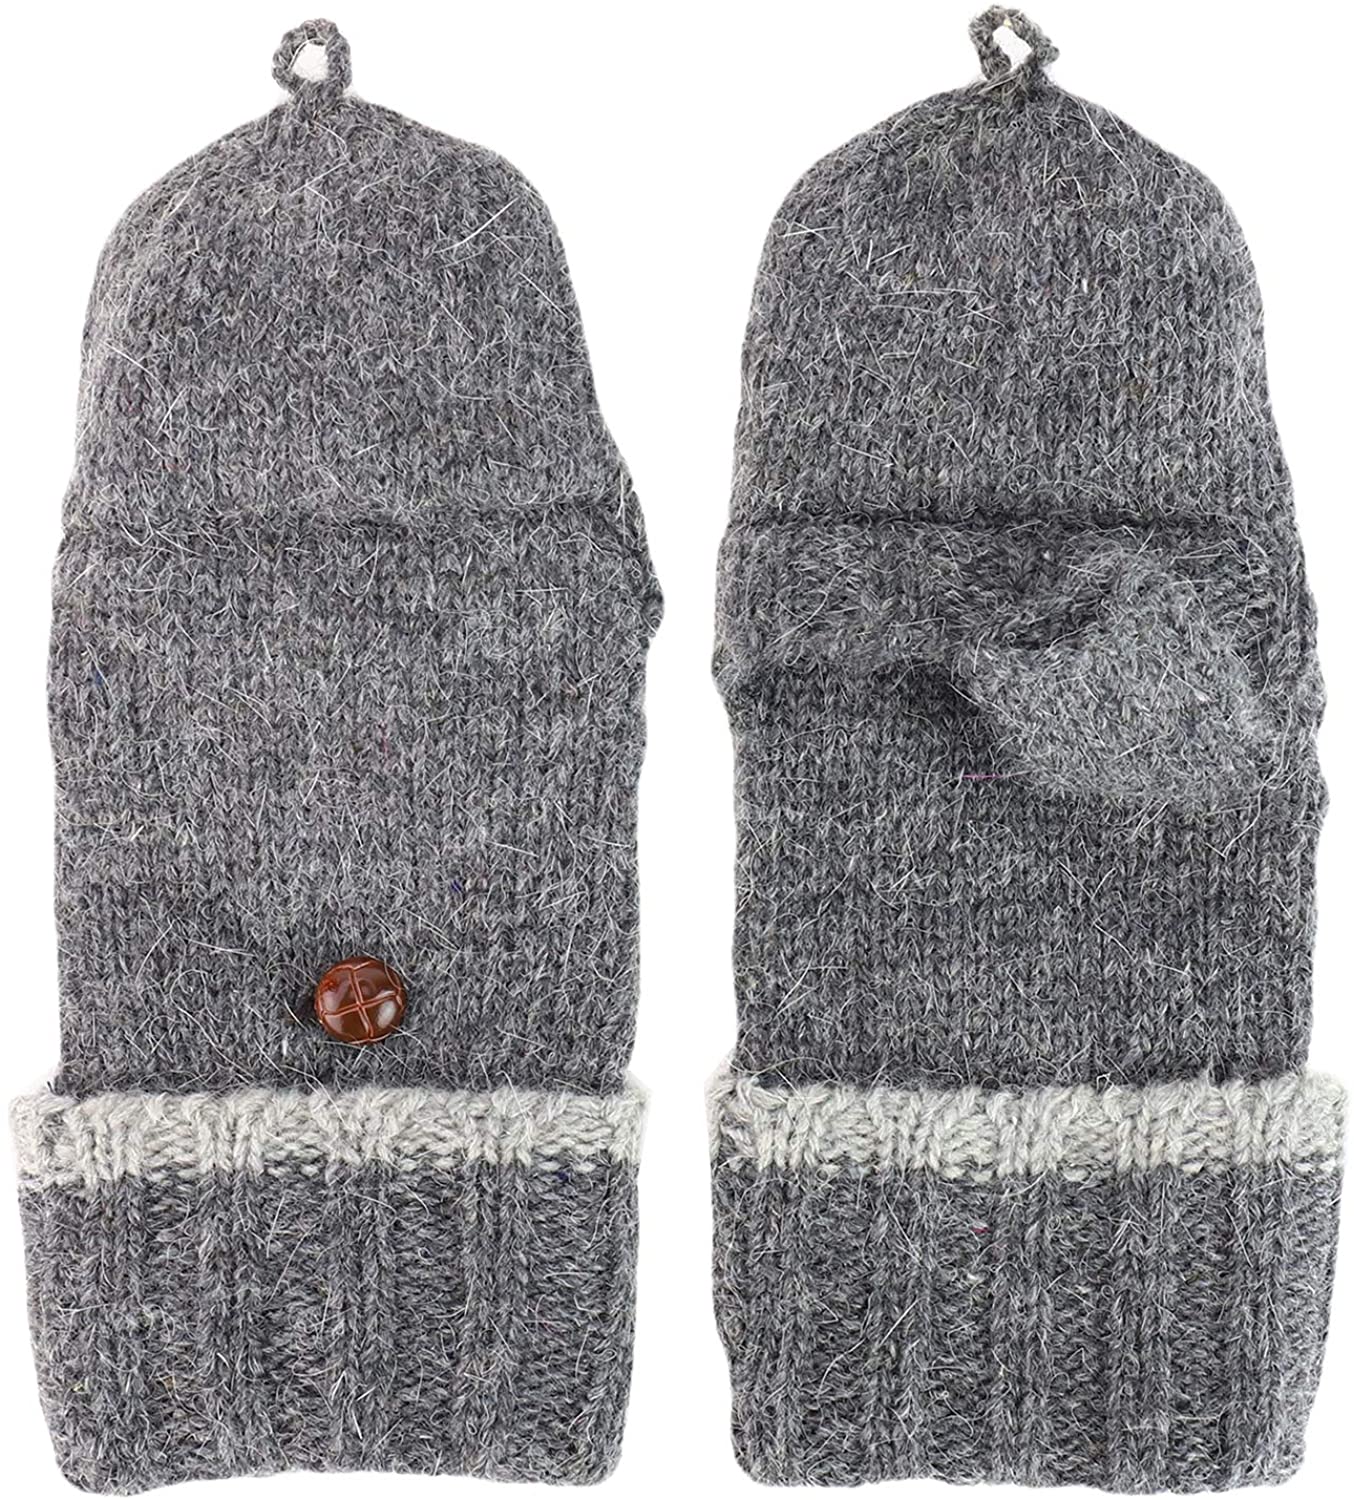 Armycrew kid's Youth Winter Wool Mitten Convertible Flip Top Glove